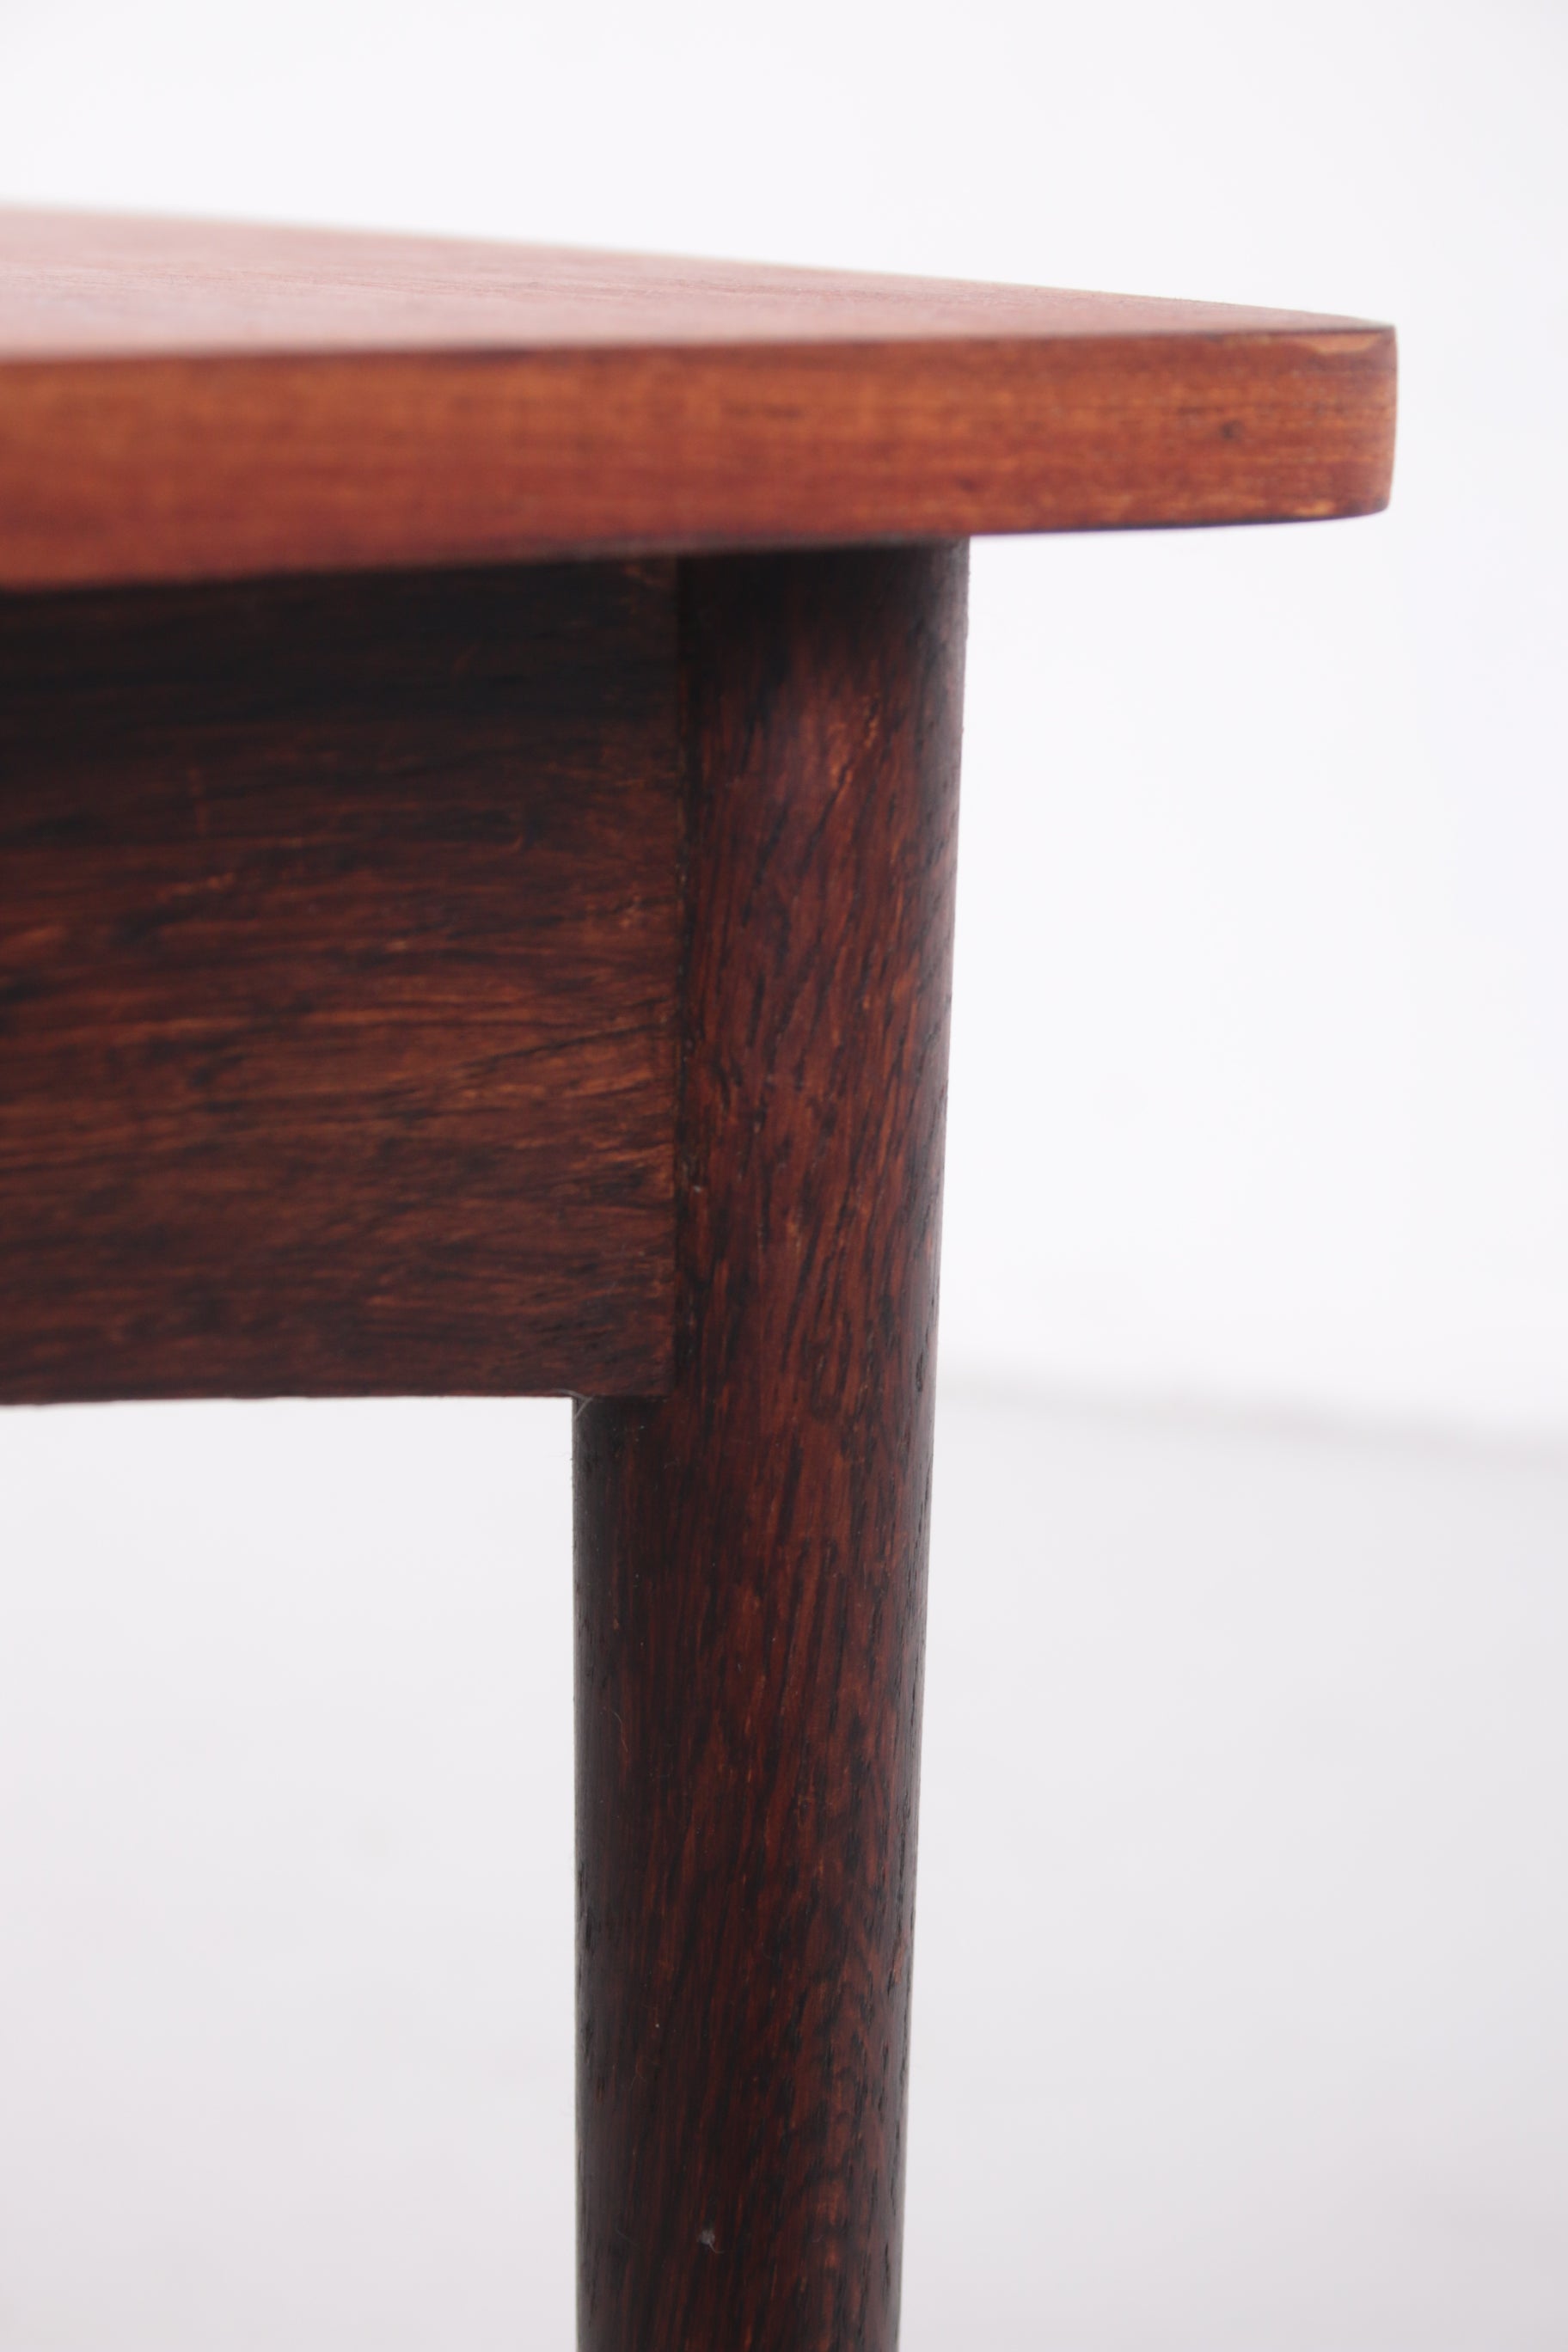 Vintage Deens design nesting tables mimiset bijzettafels van teak hout rand bovenkant